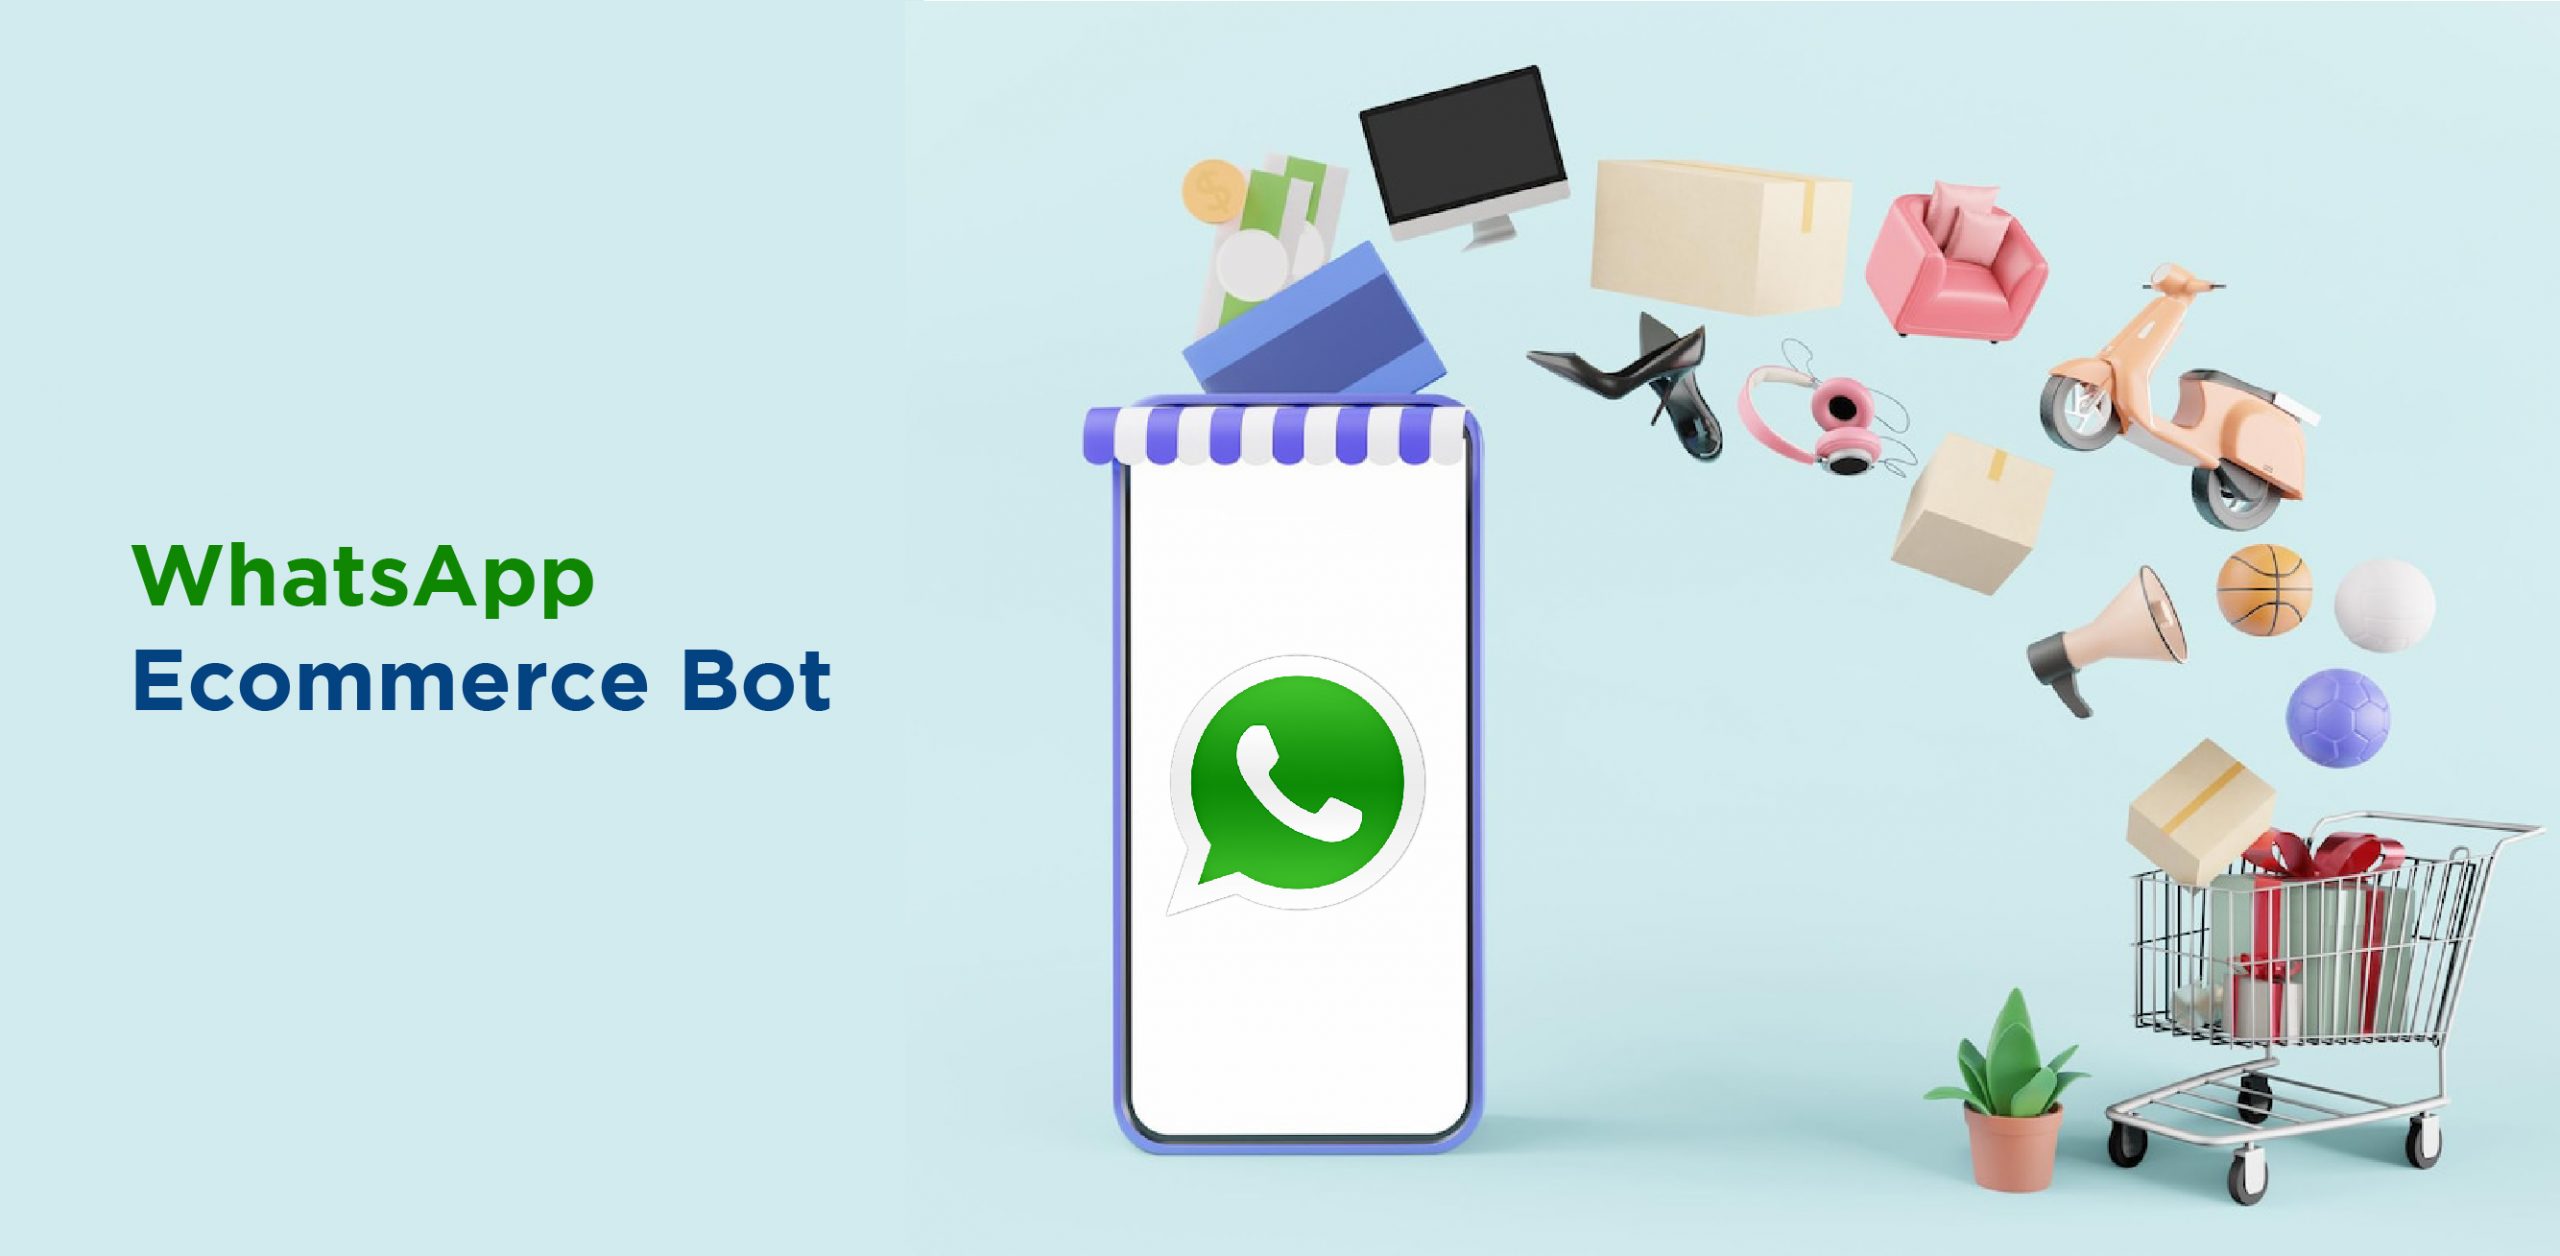 WhatsApp Ecommerce Bot